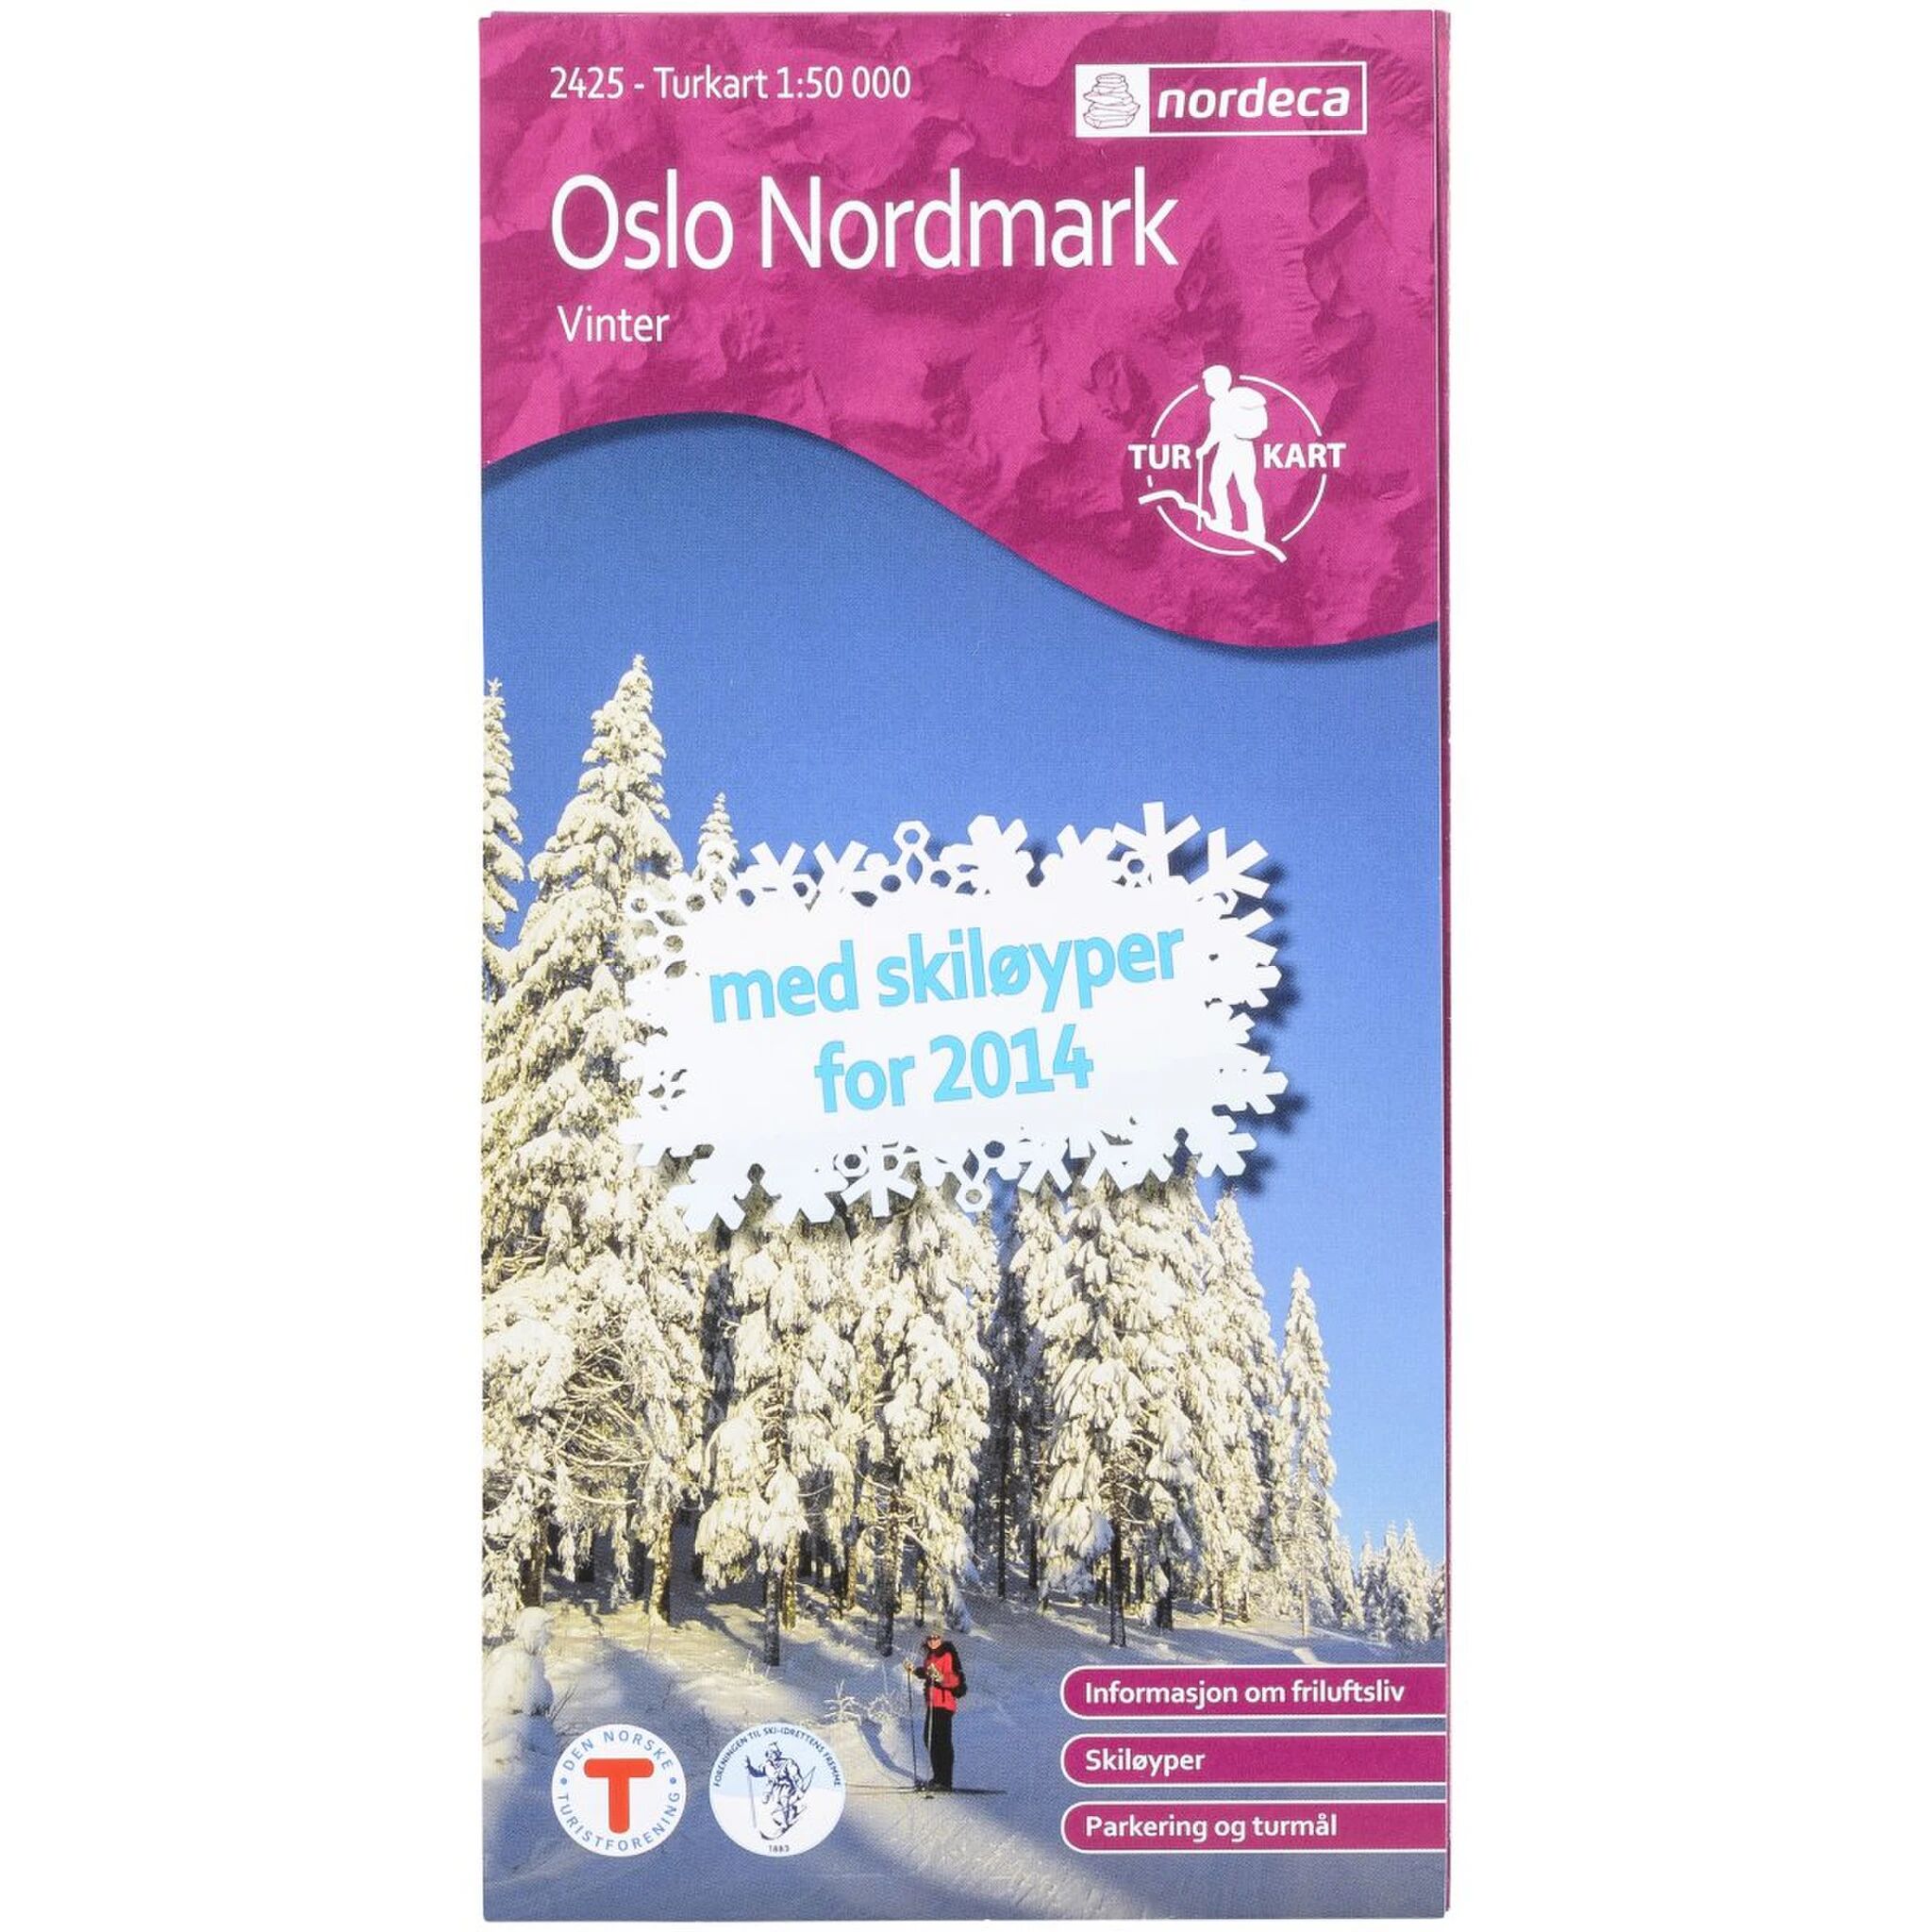 Nordeca OSLO NORDMARK VINTER 1:50 000 oneSize none